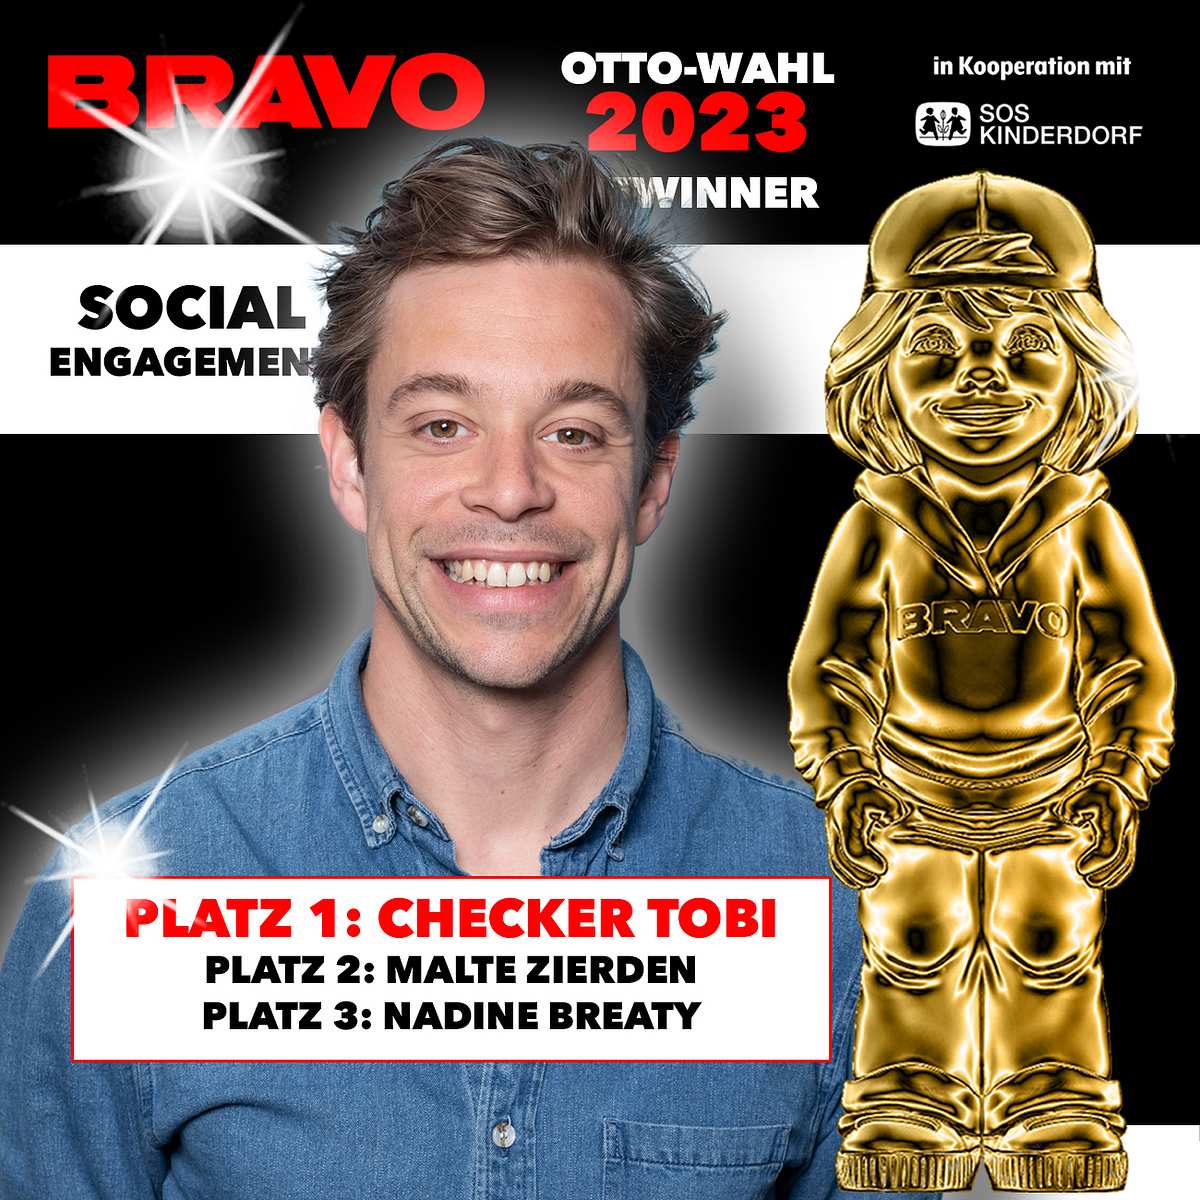 BRAVO Otto wahl 2023 Checker Tobi